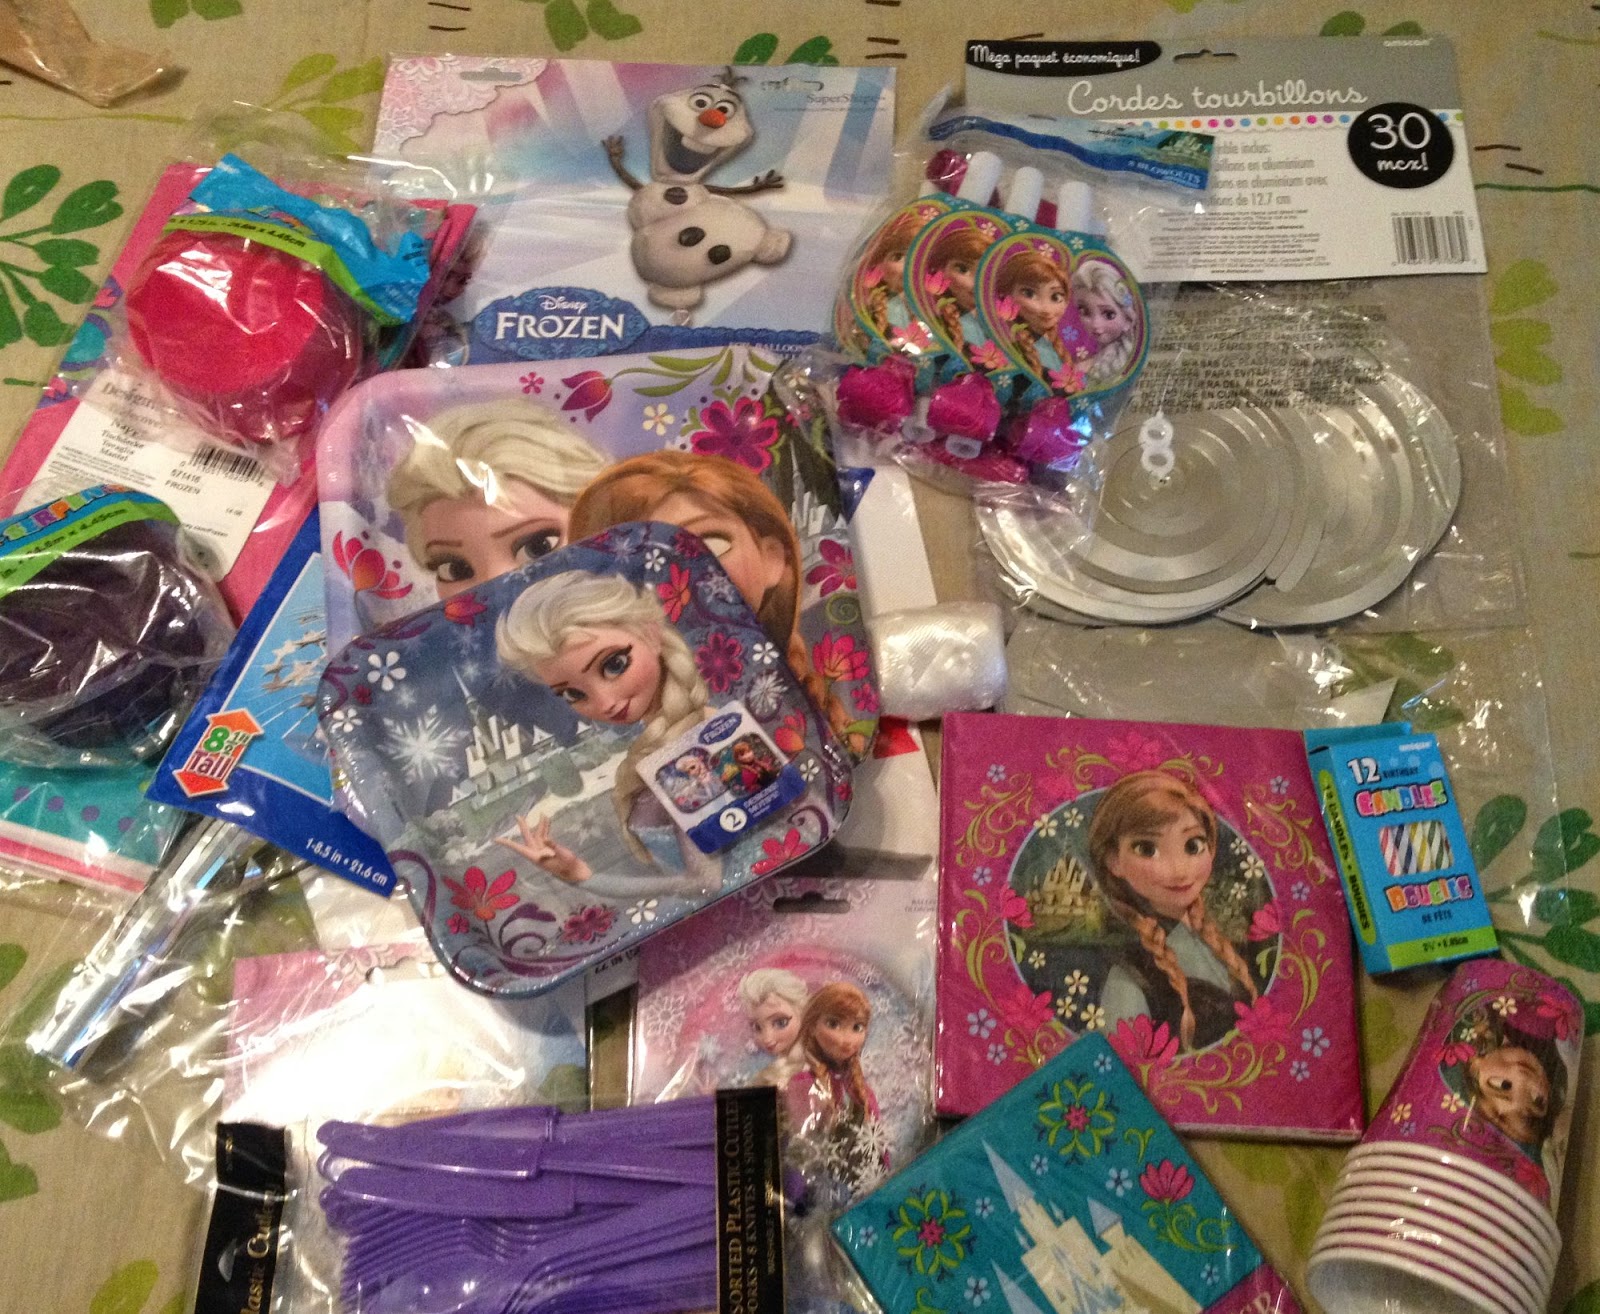 Cummins Life Wholesale  Party  Supplies  Frozen Party  Kit Review